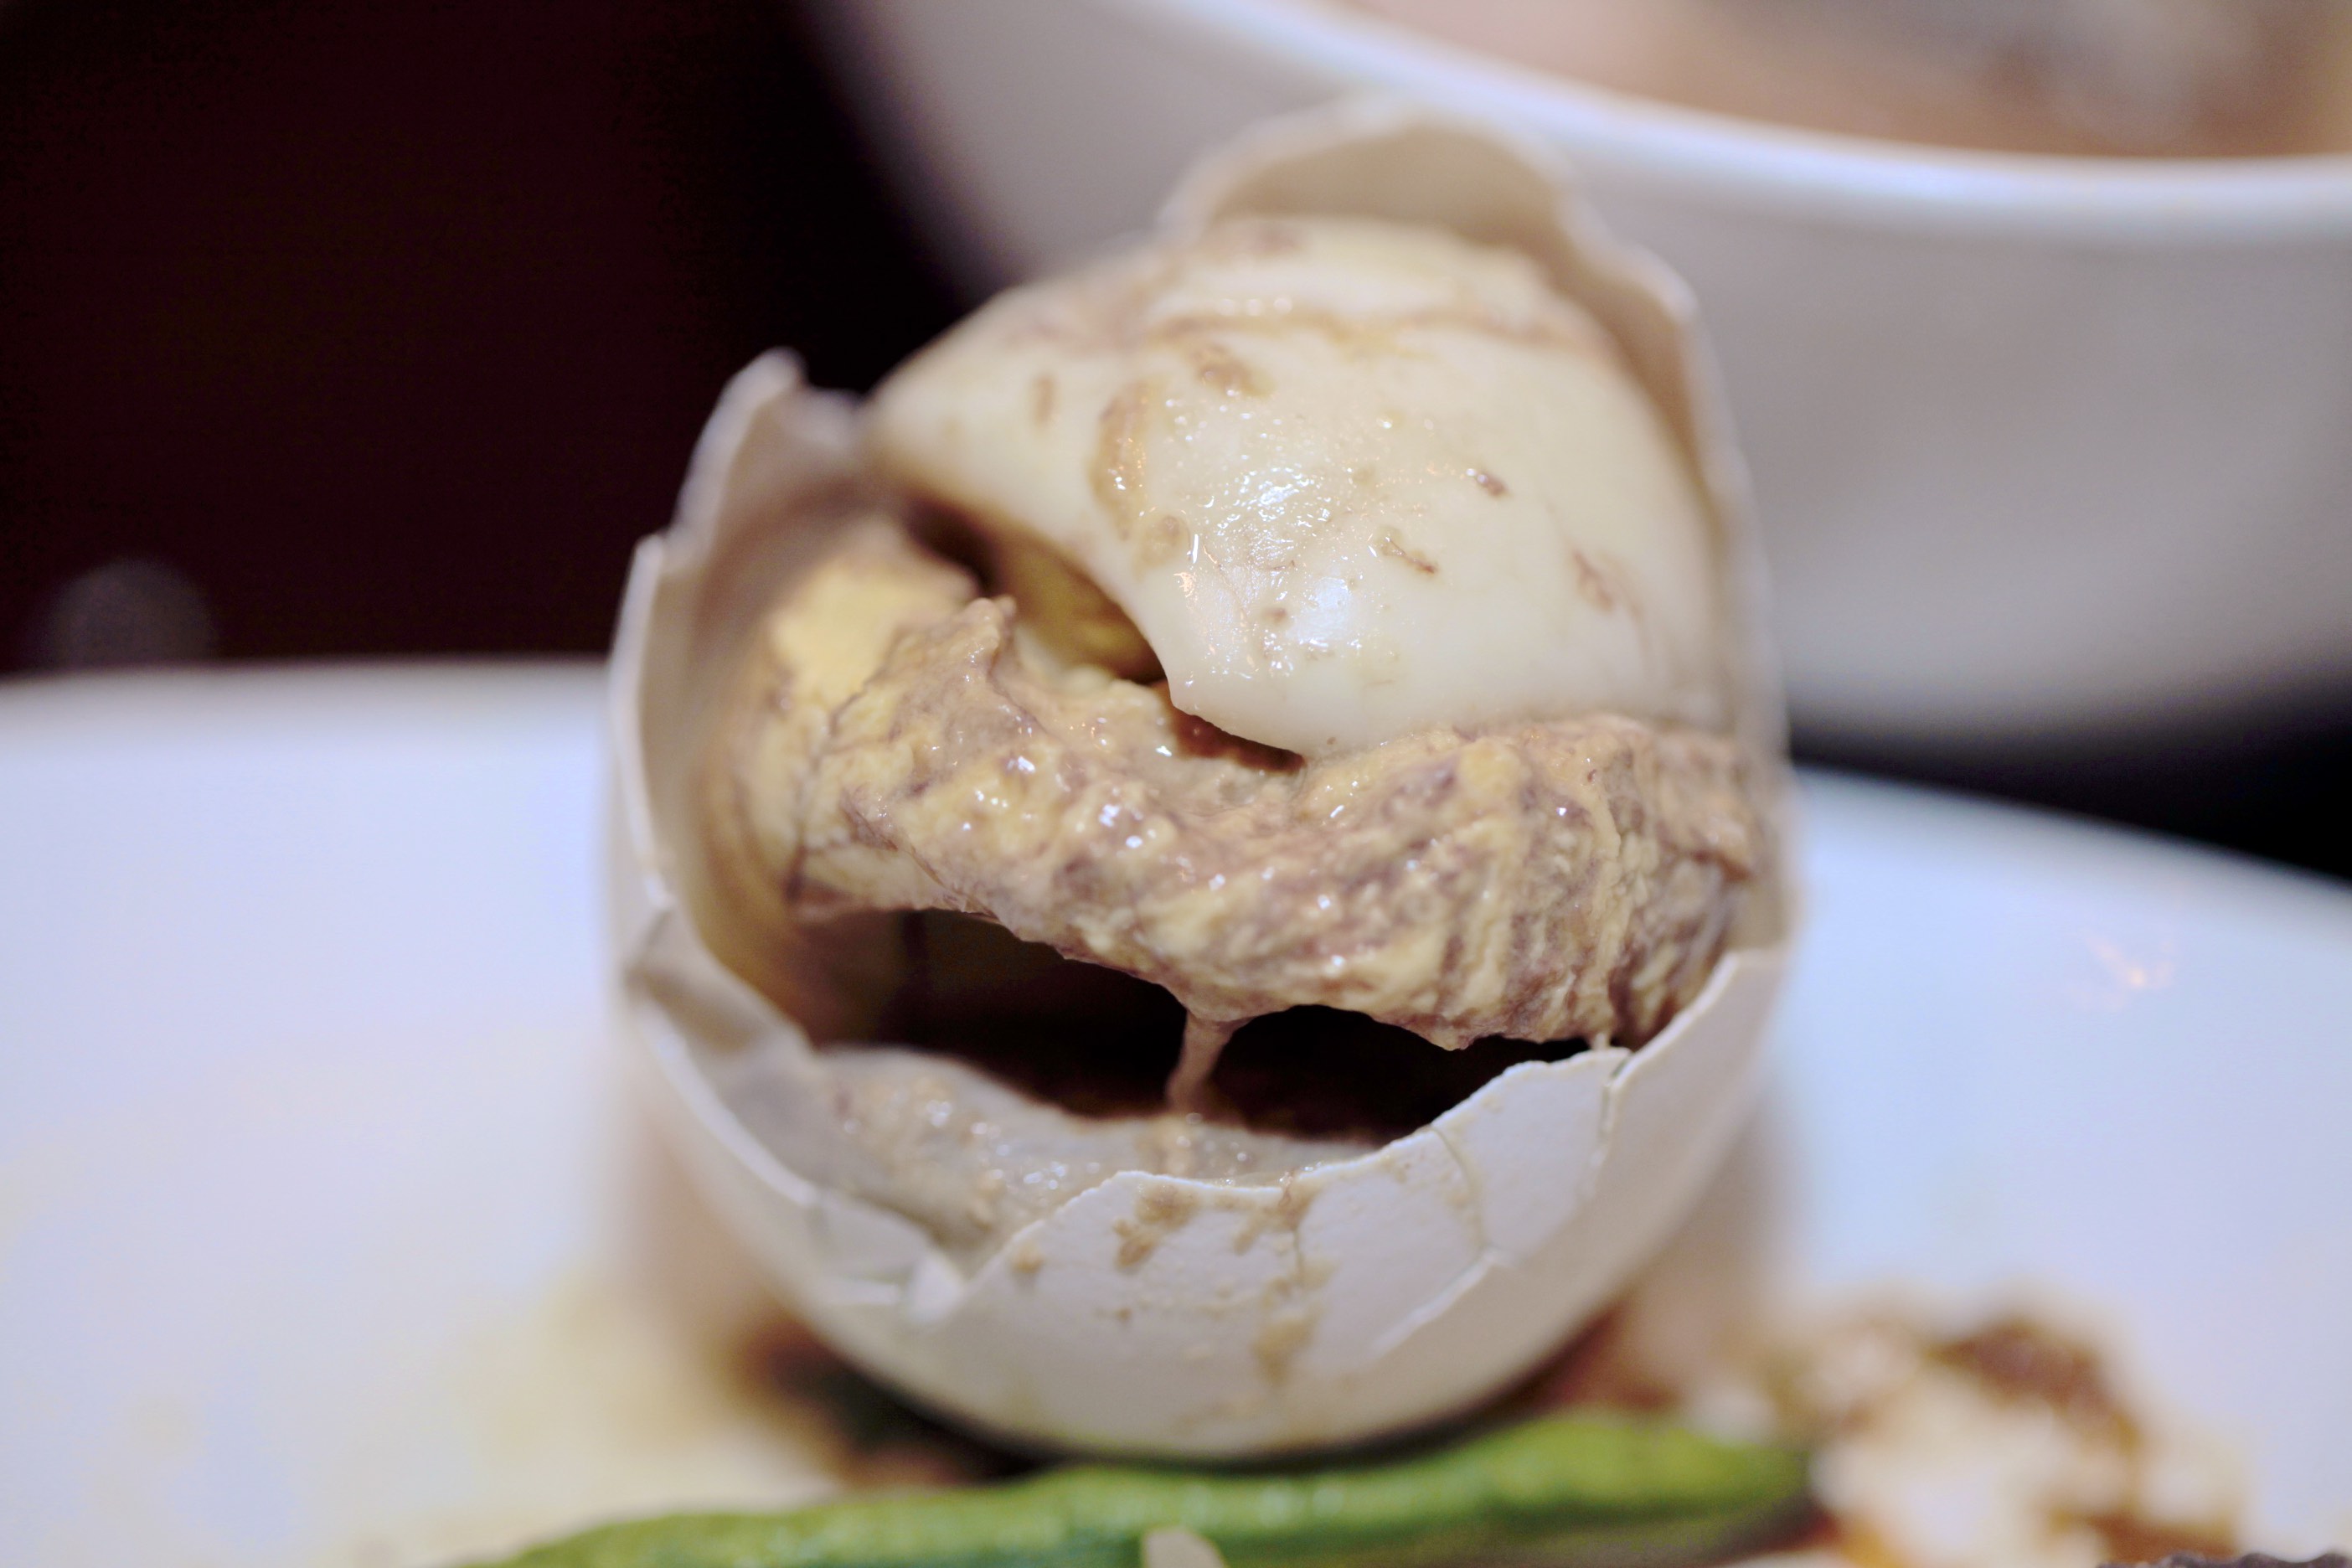 Kai luak (balut): steamed, fertilized chicken egg